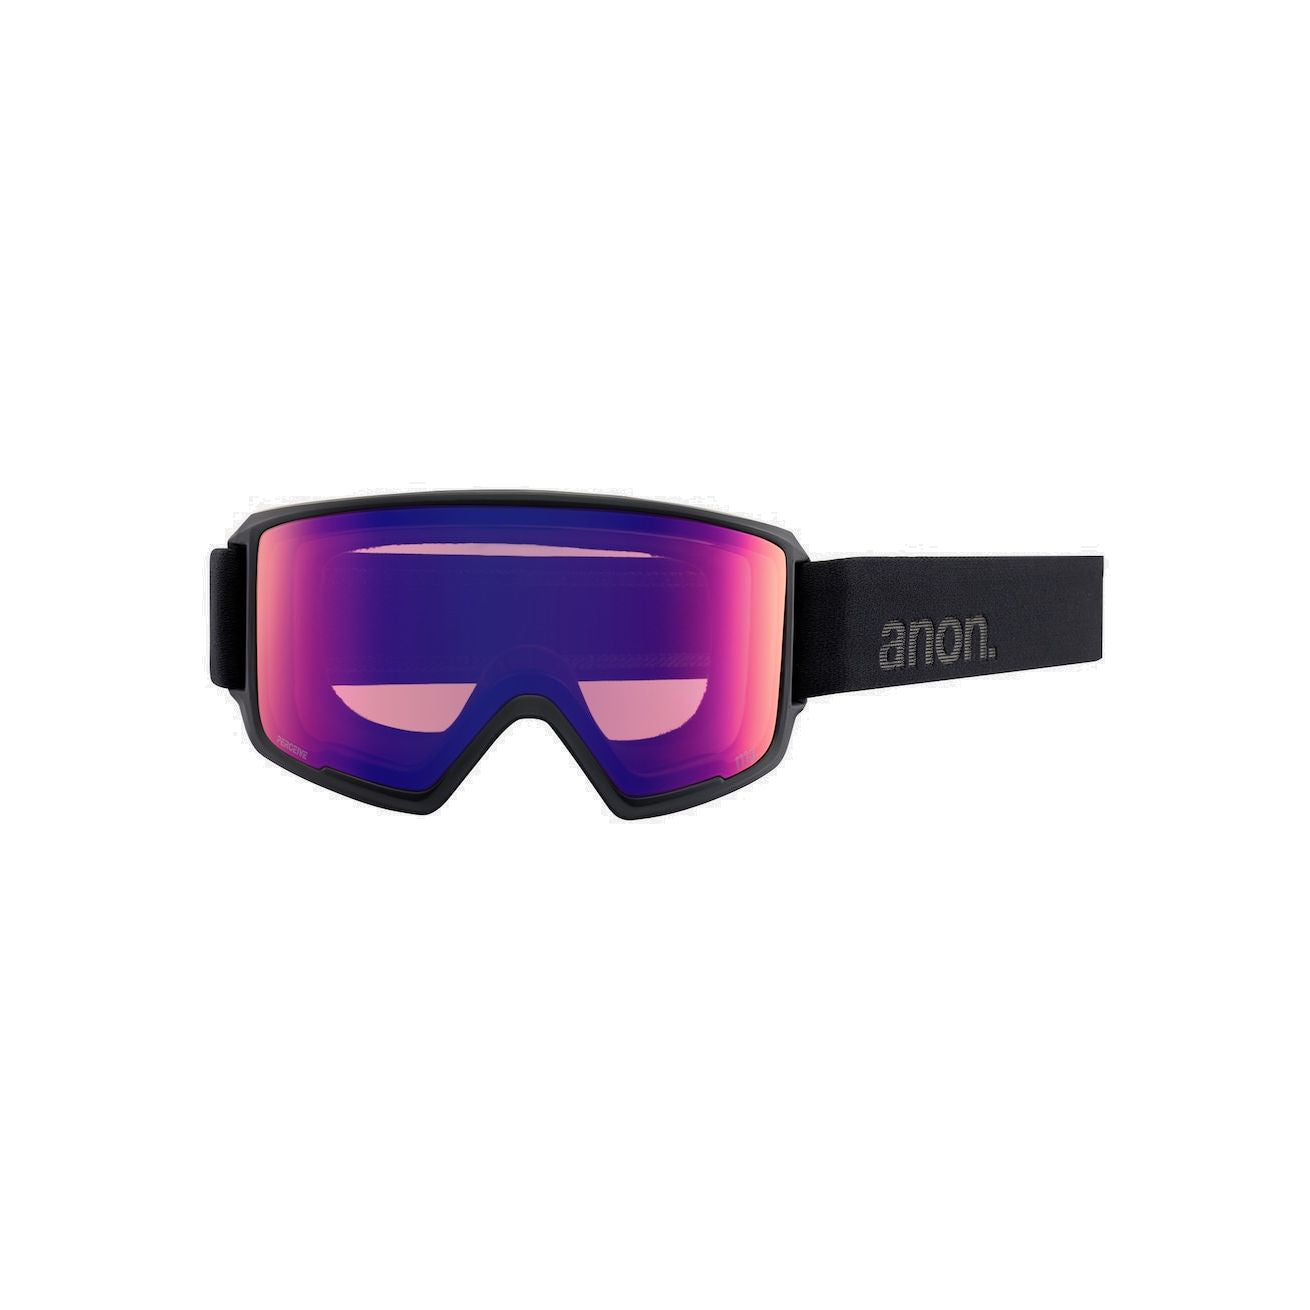 Anon M3 Goggles + Bonus Lens + MFI Face Mask - Low Bridge Fit Smoke / Perceive Sunny Onyx / Perceive Sunny Onyx (6% / S4) Snow Goggles